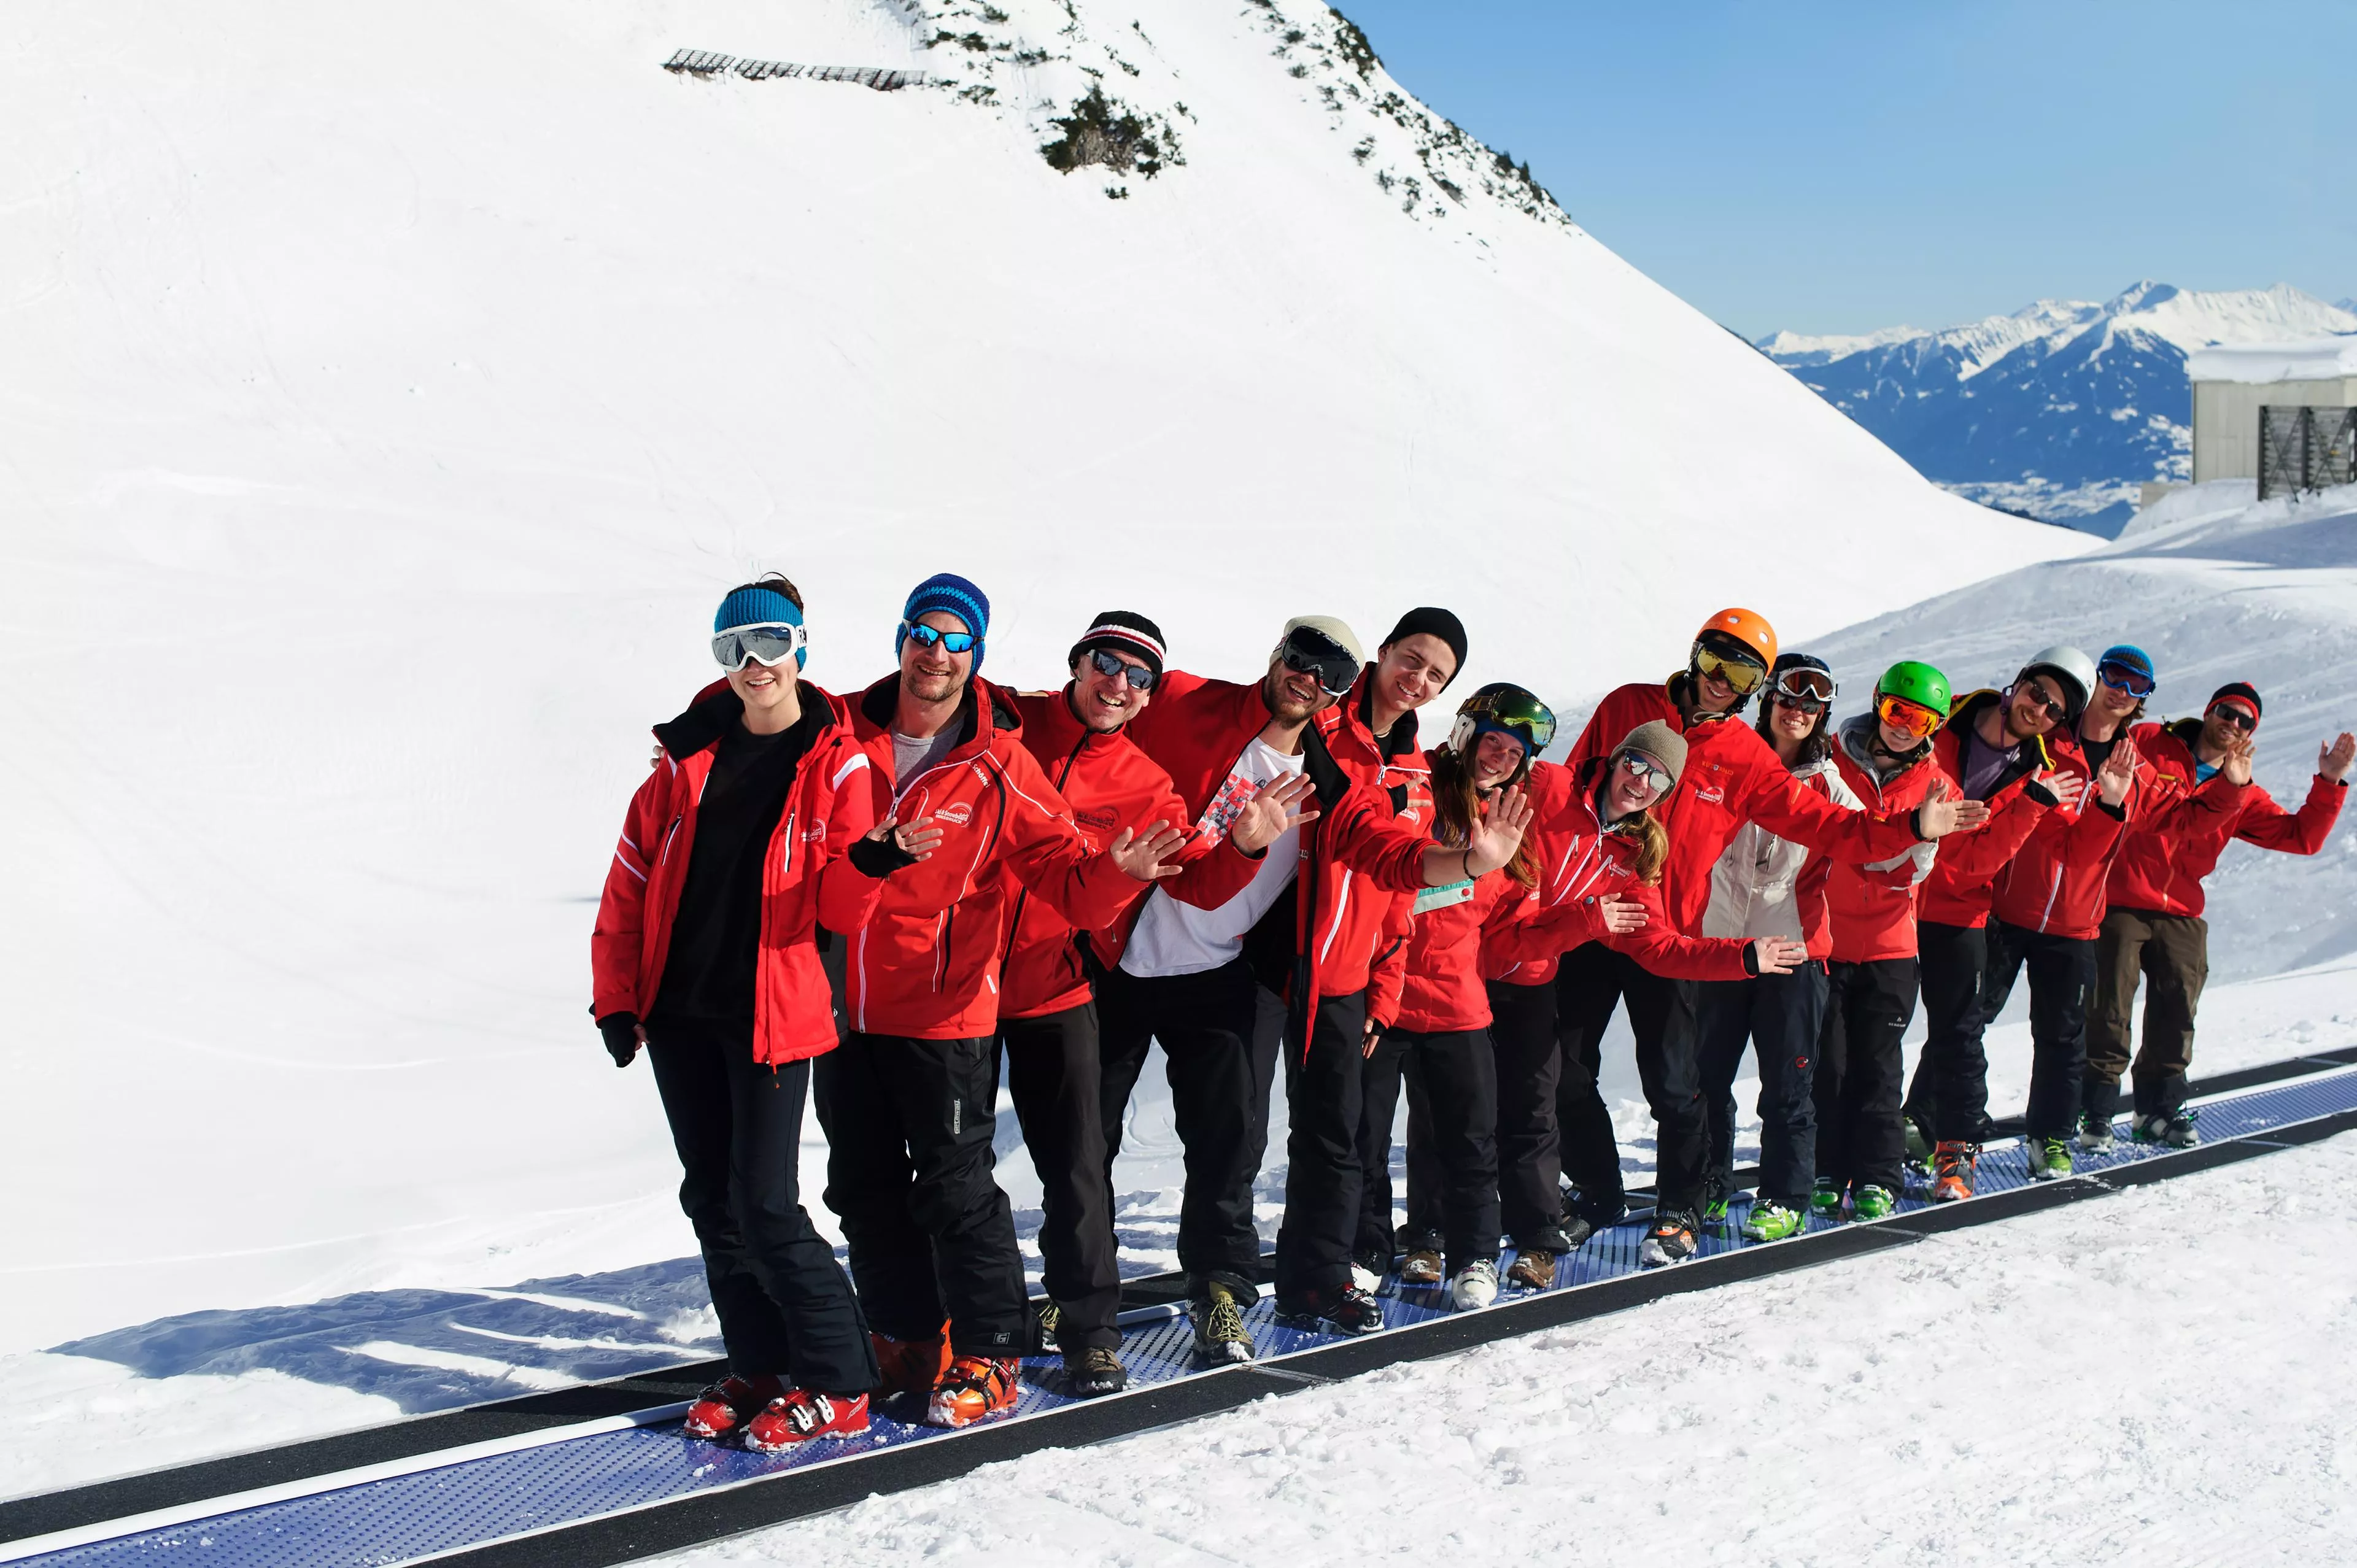 Ski and Snowboard School Alpbach in Austria, Europe | Snowboarding,Skiing - Rated 0.8